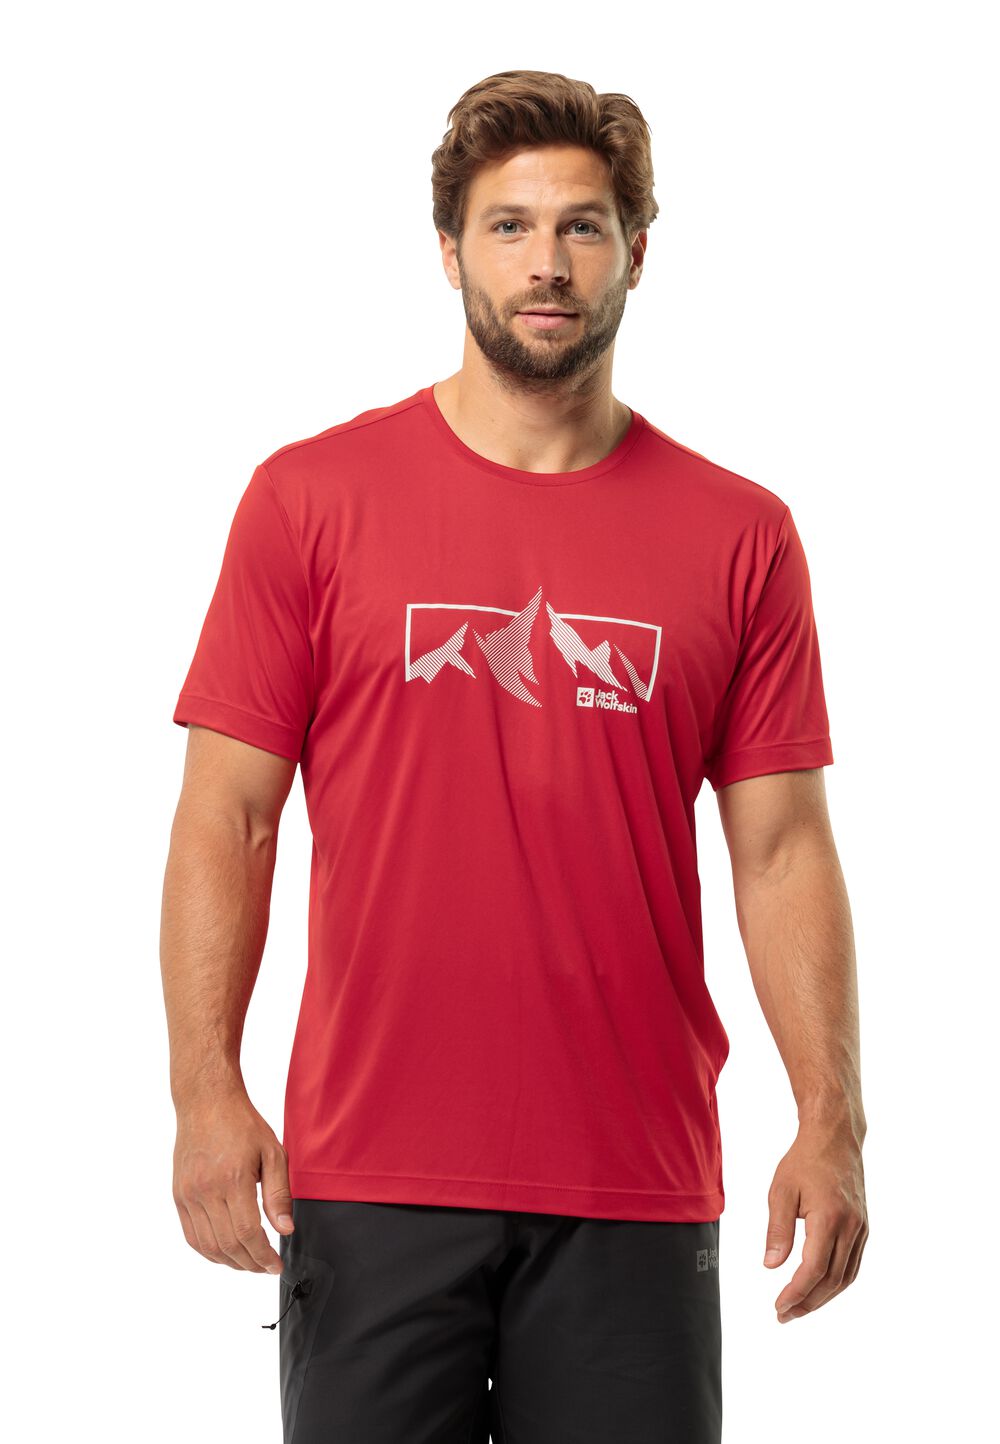 Jack Wolfskin Peak Graphic T-Shirt Men Functioneel shirt Heren L rood red glow